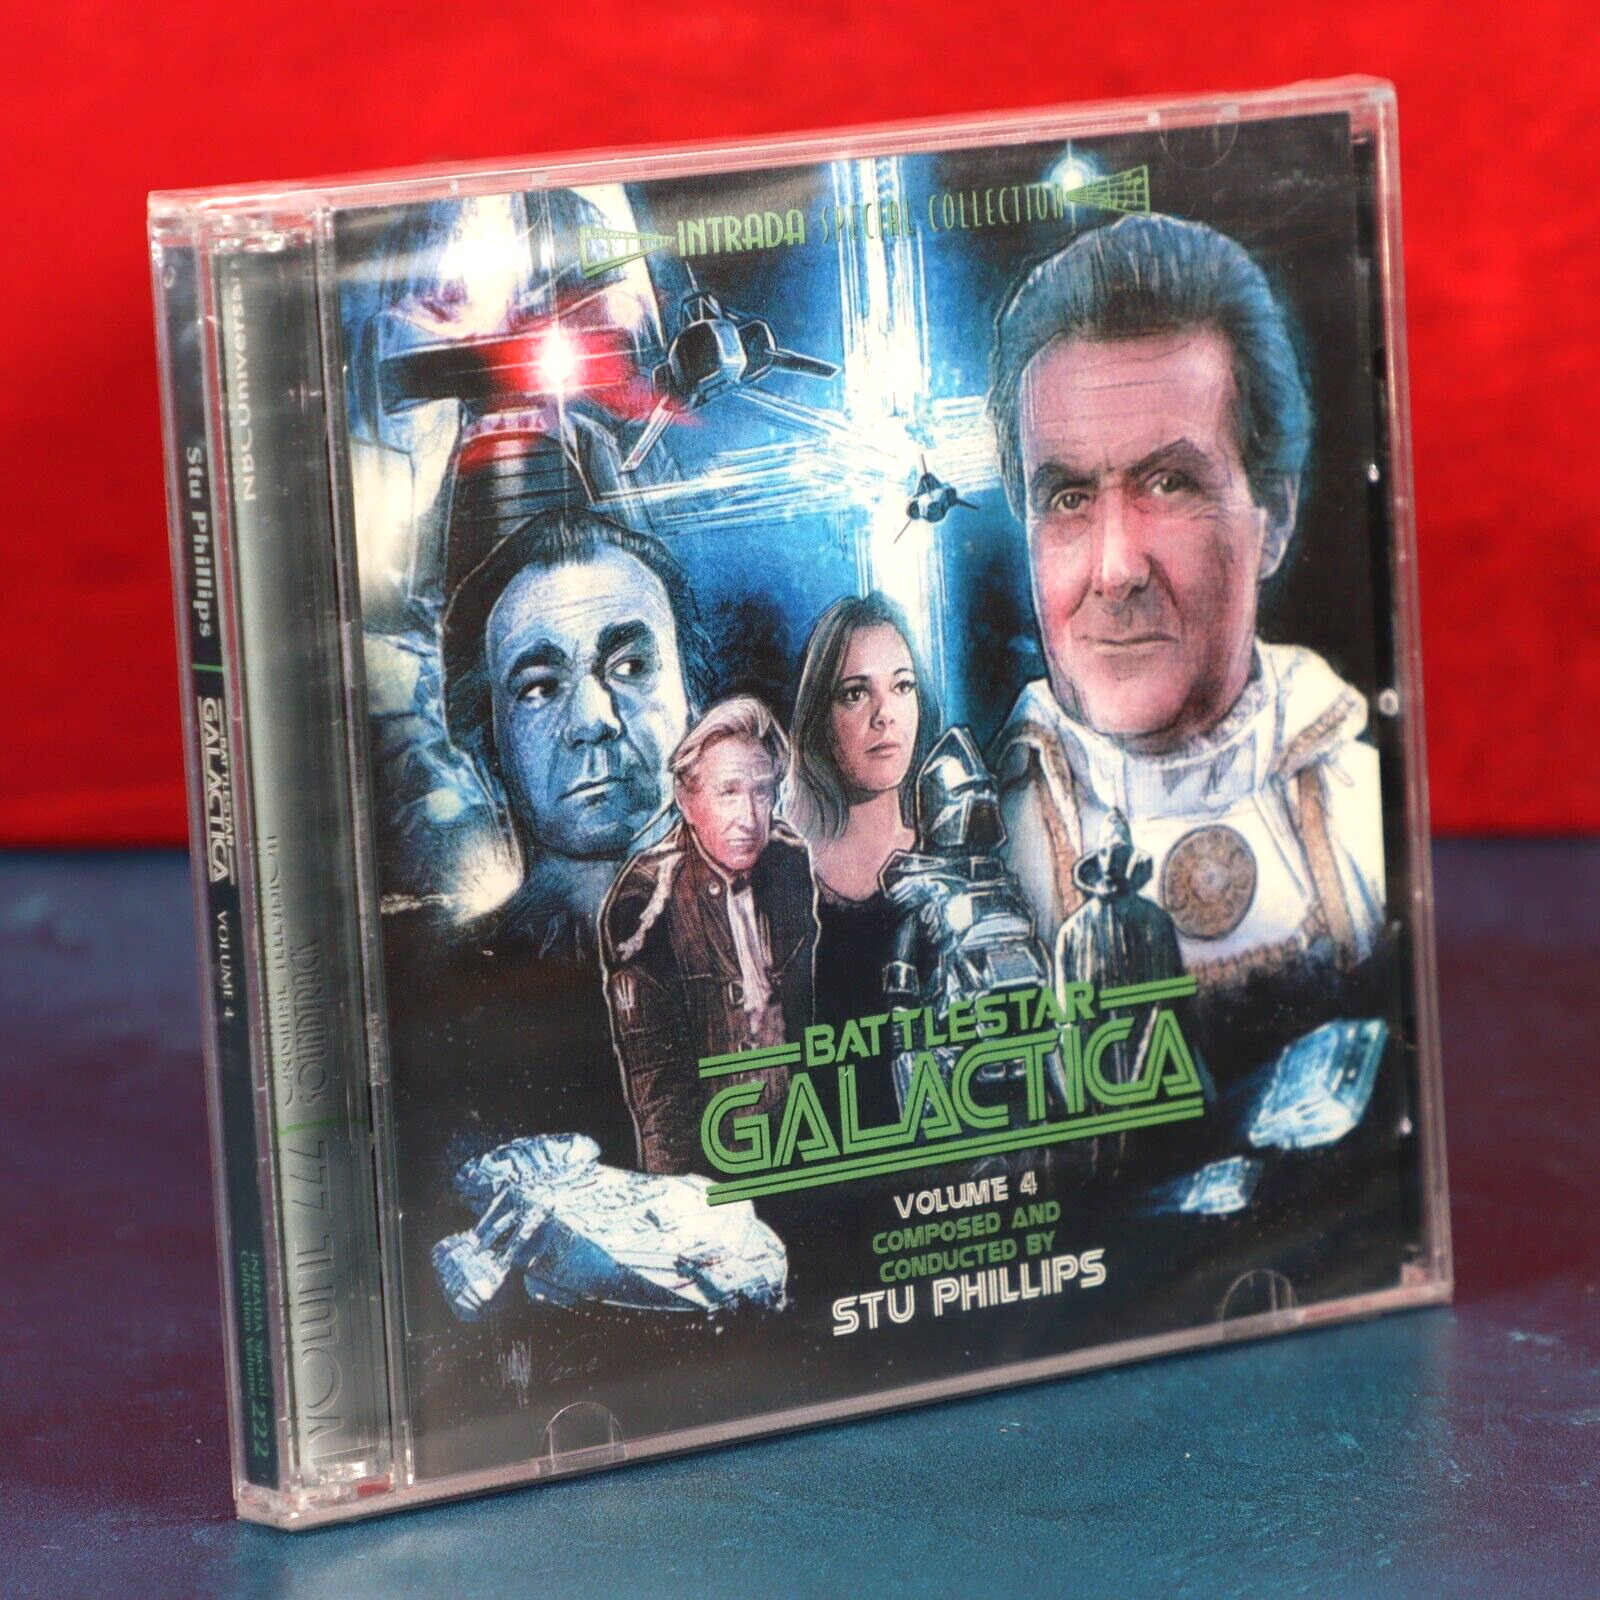 Battlestar Galactica Vol 4 TV Soundtrack 2-CD Intrada Stu Philips 2012 Sealed